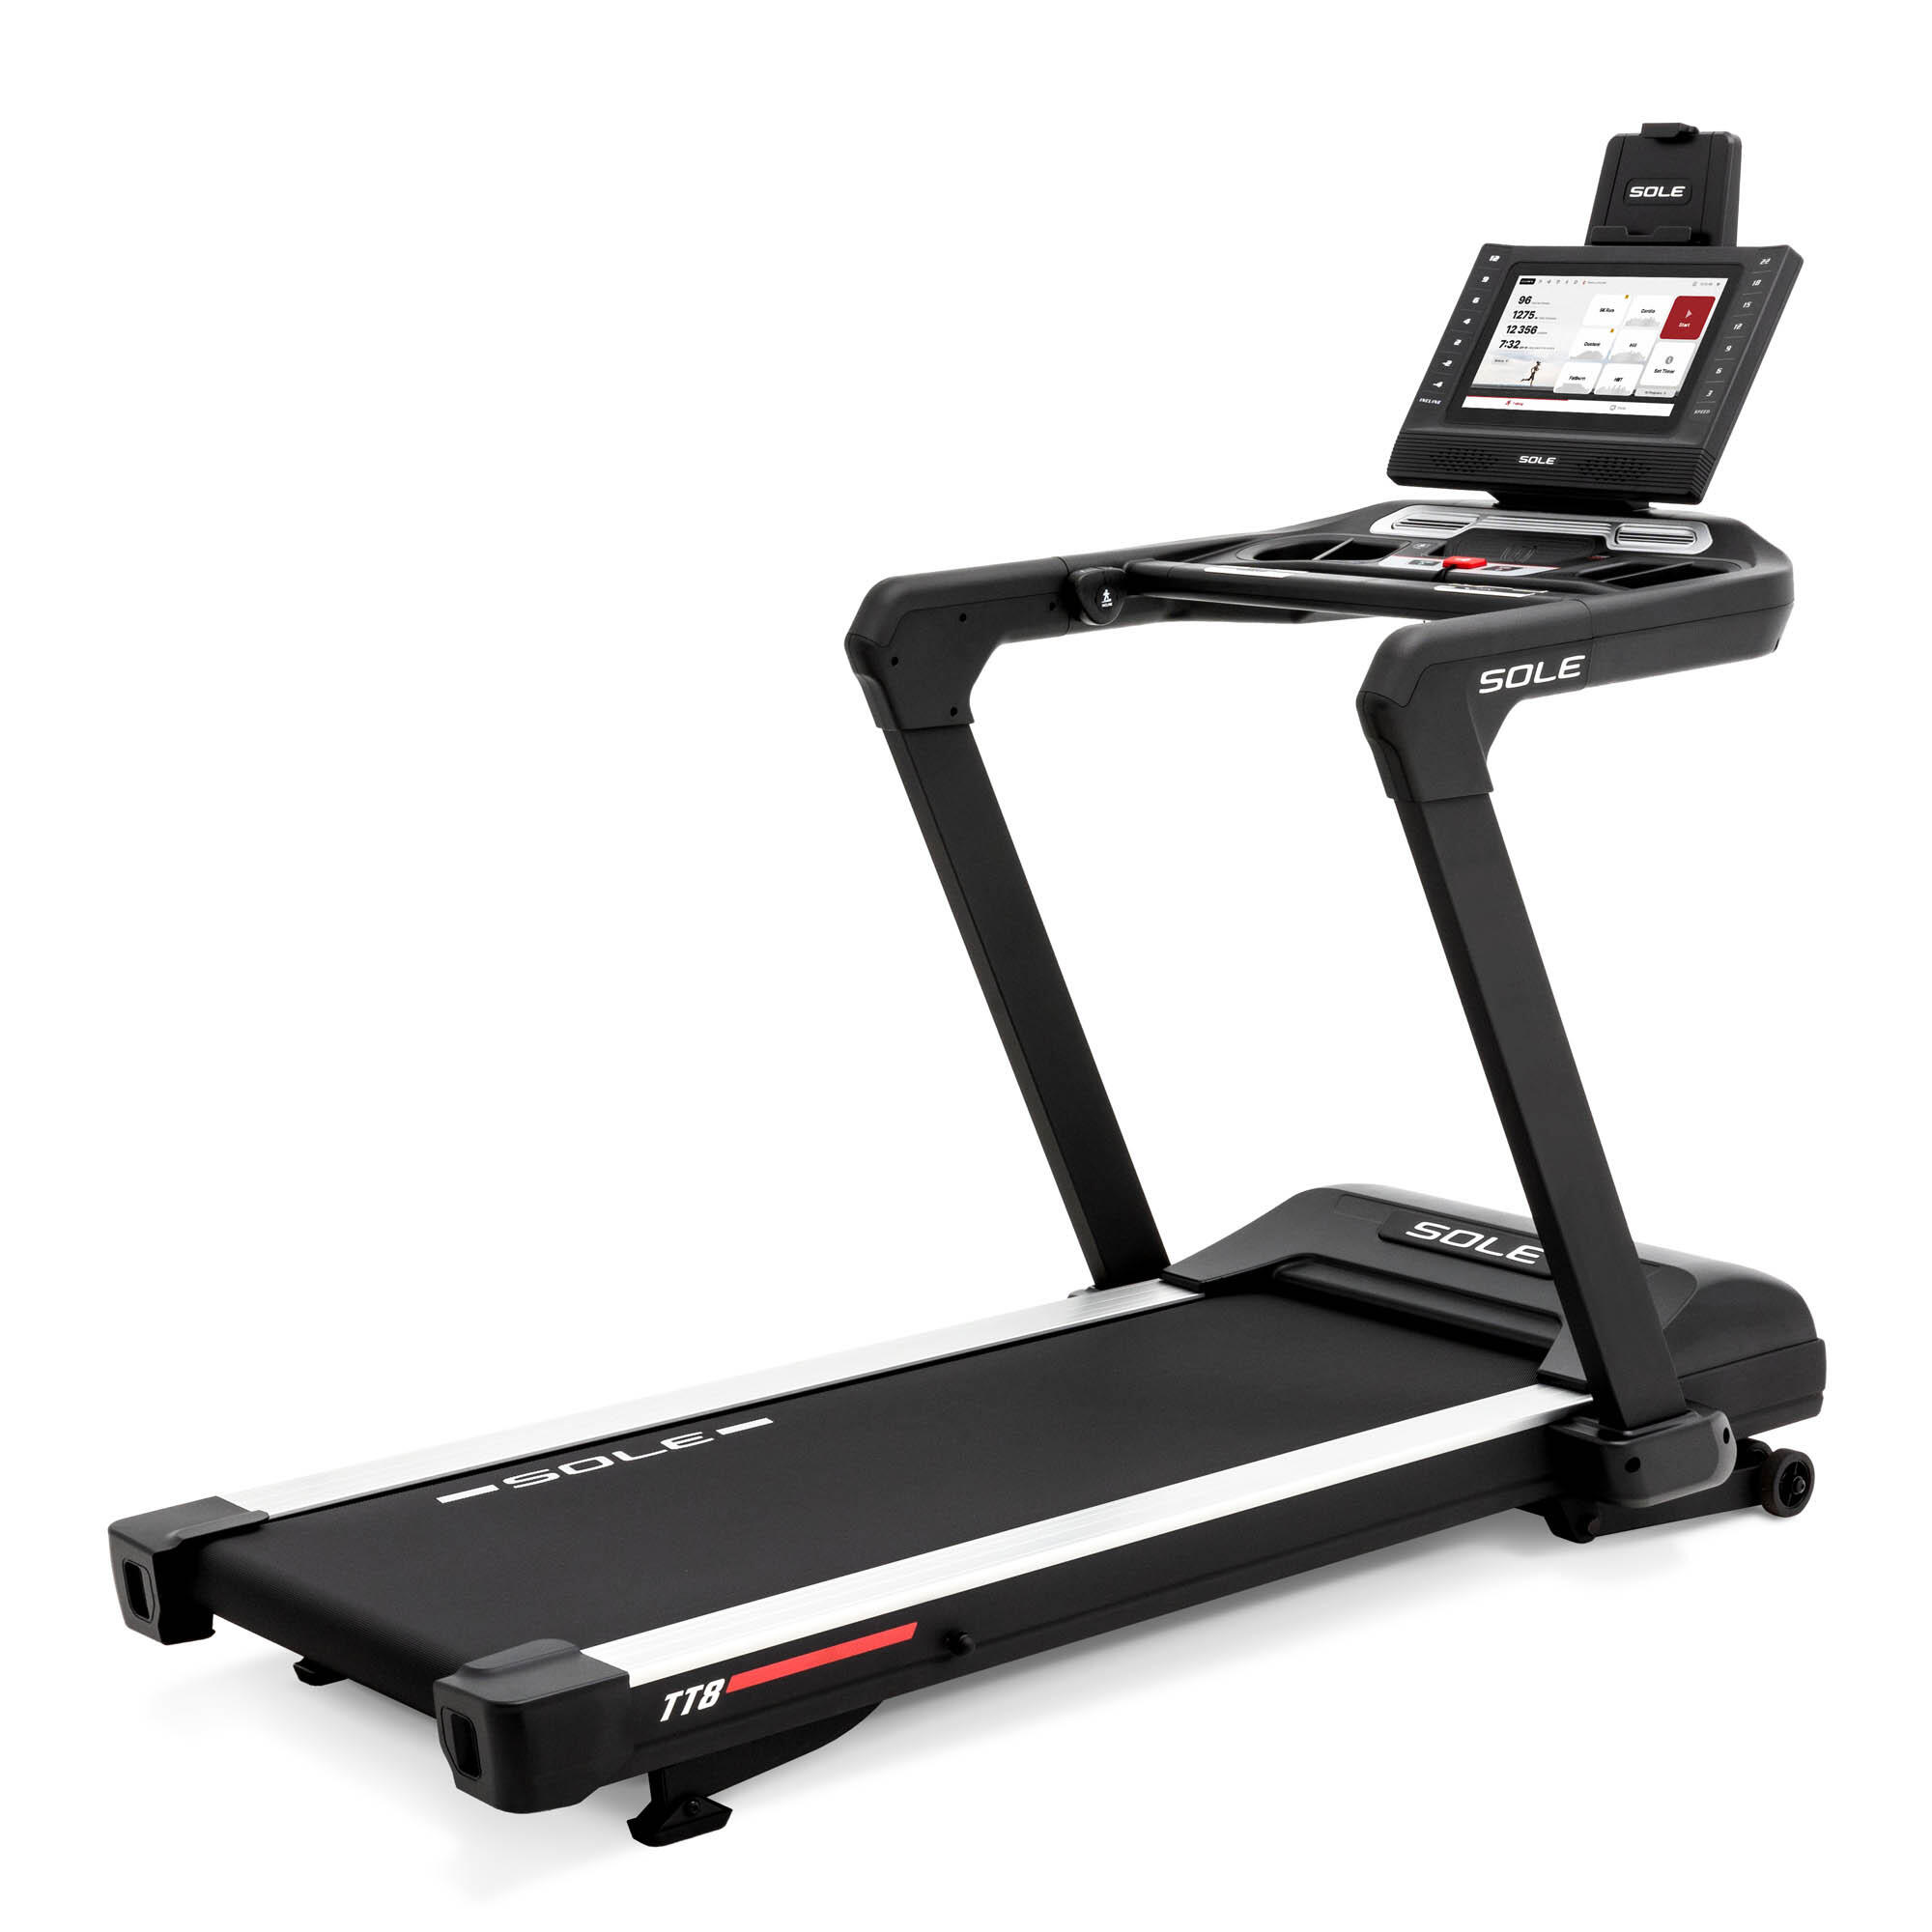 SOLE Sole Fitness TT8 Treadmill